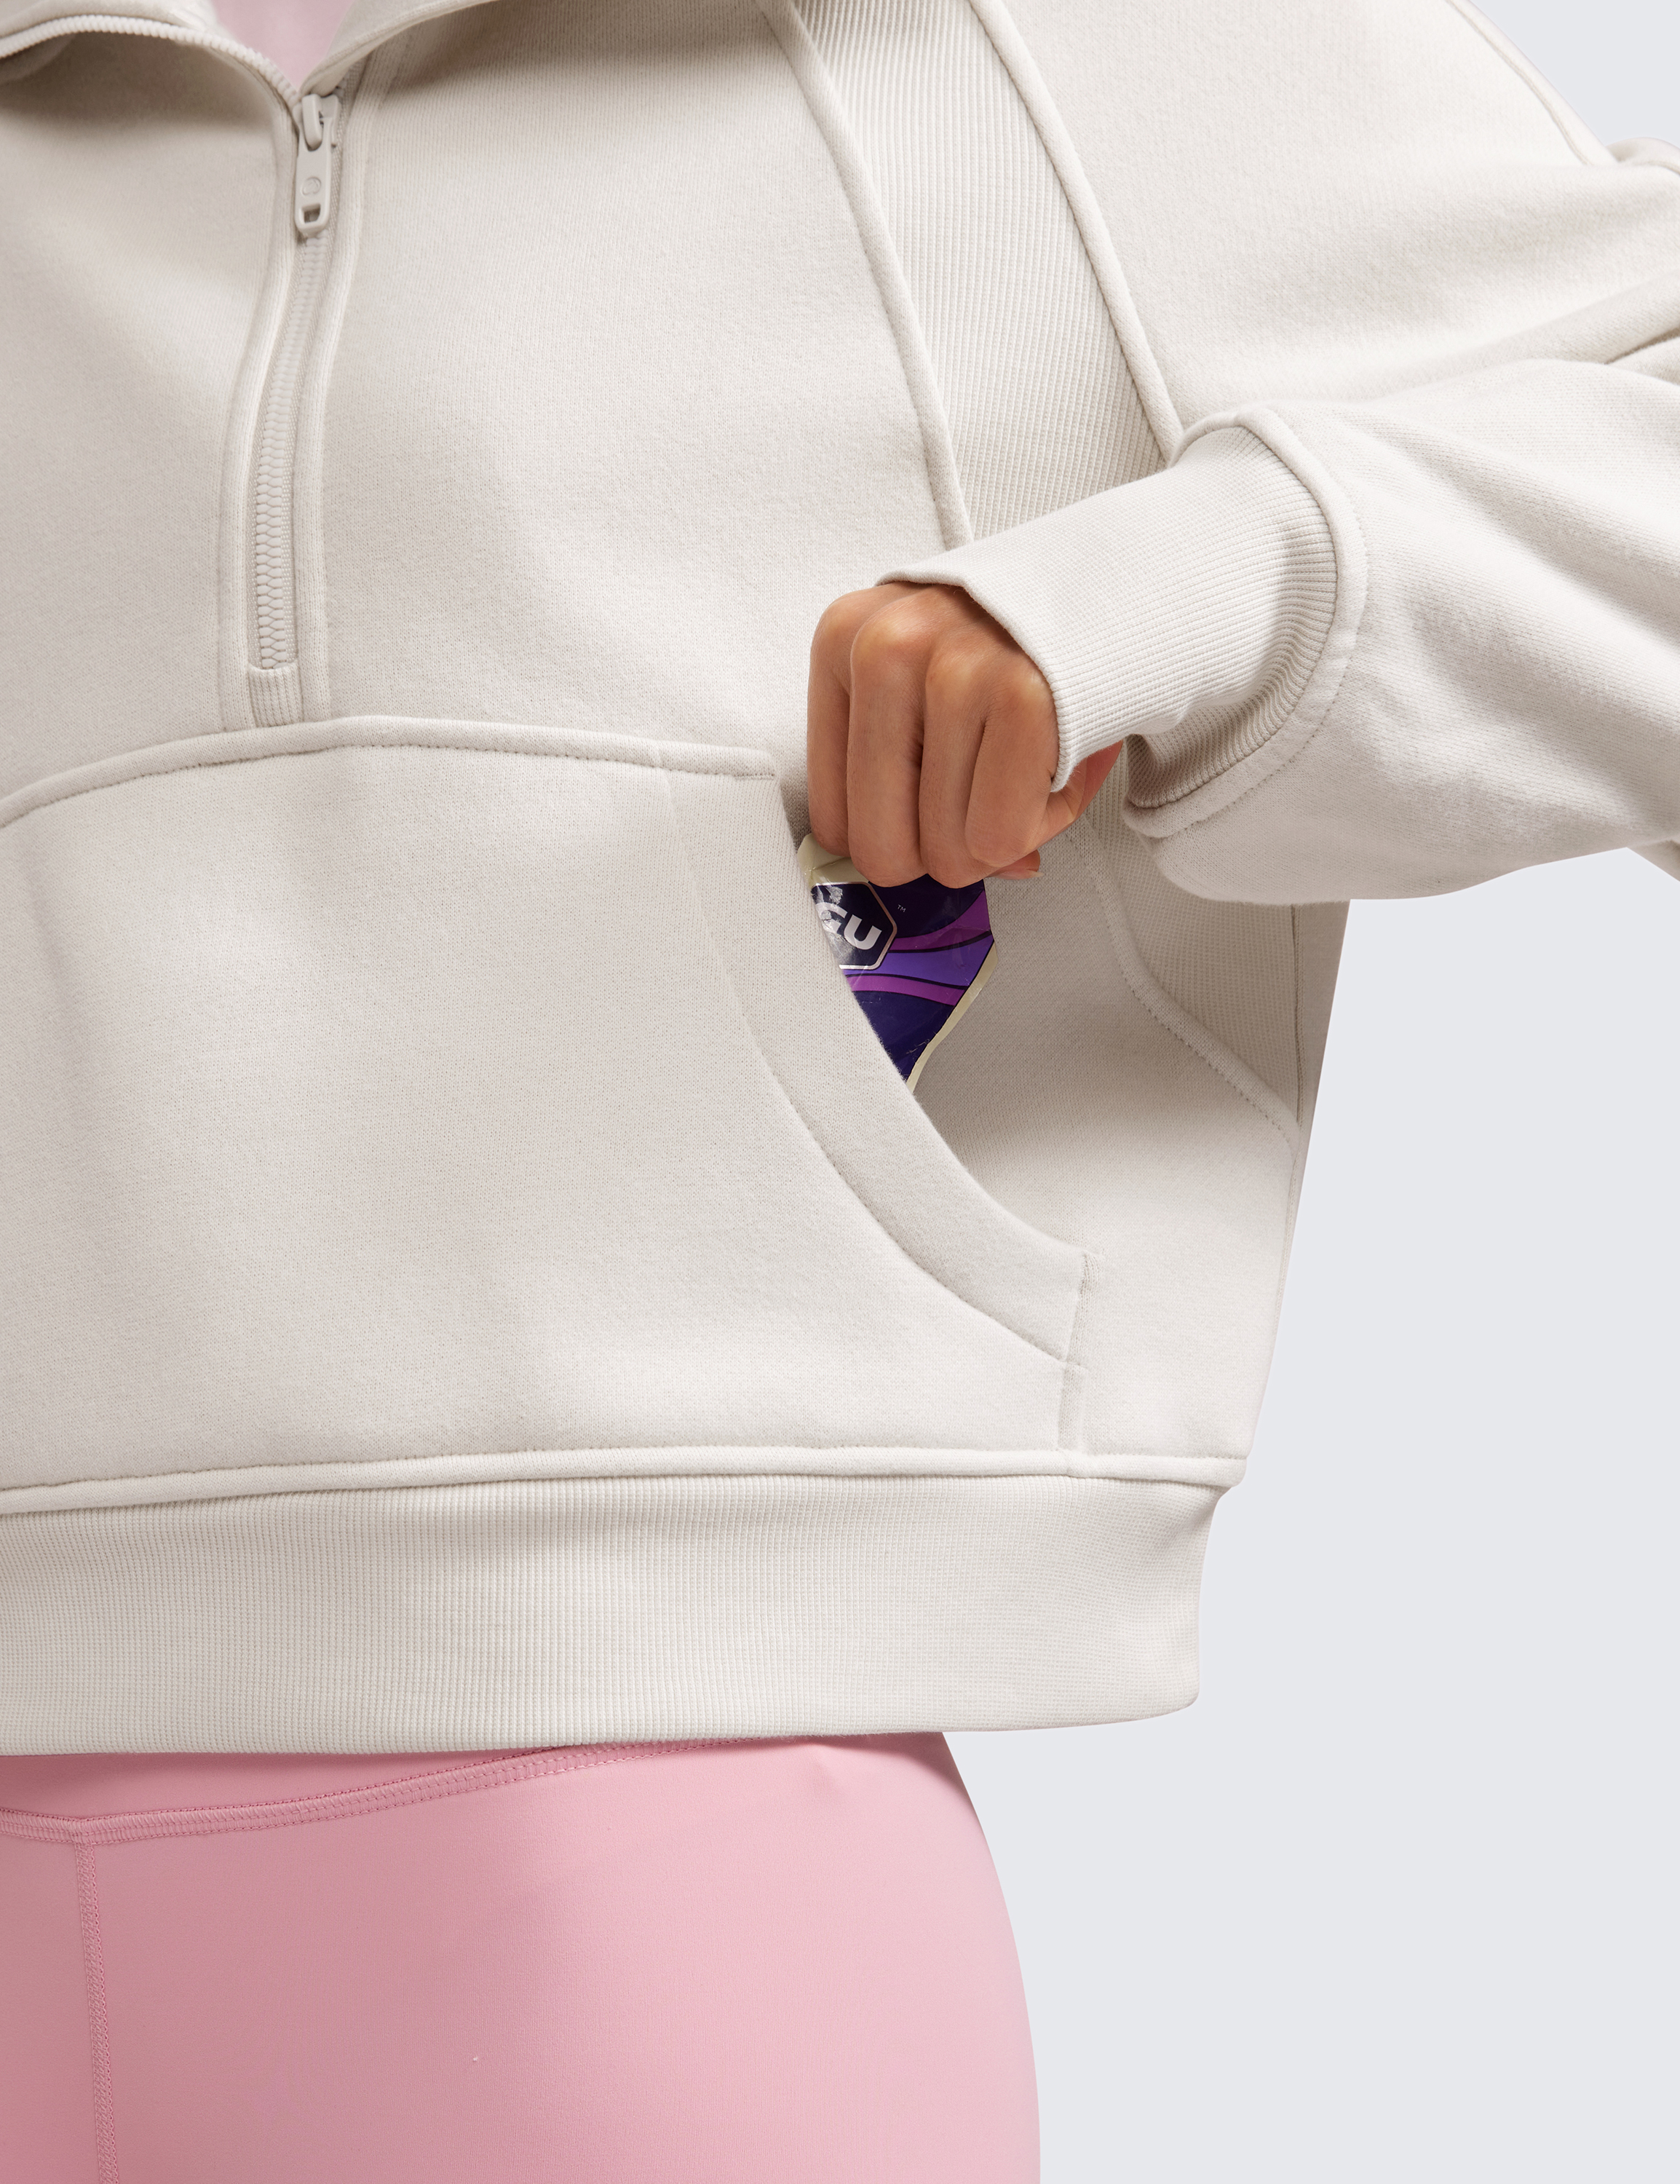 CRZ YOGA Womens Fleece Lined Half Zipper Sweatshirts Funnel Neck Long  Sleeve Oversized Pullover Hoodies with Thumb Holes